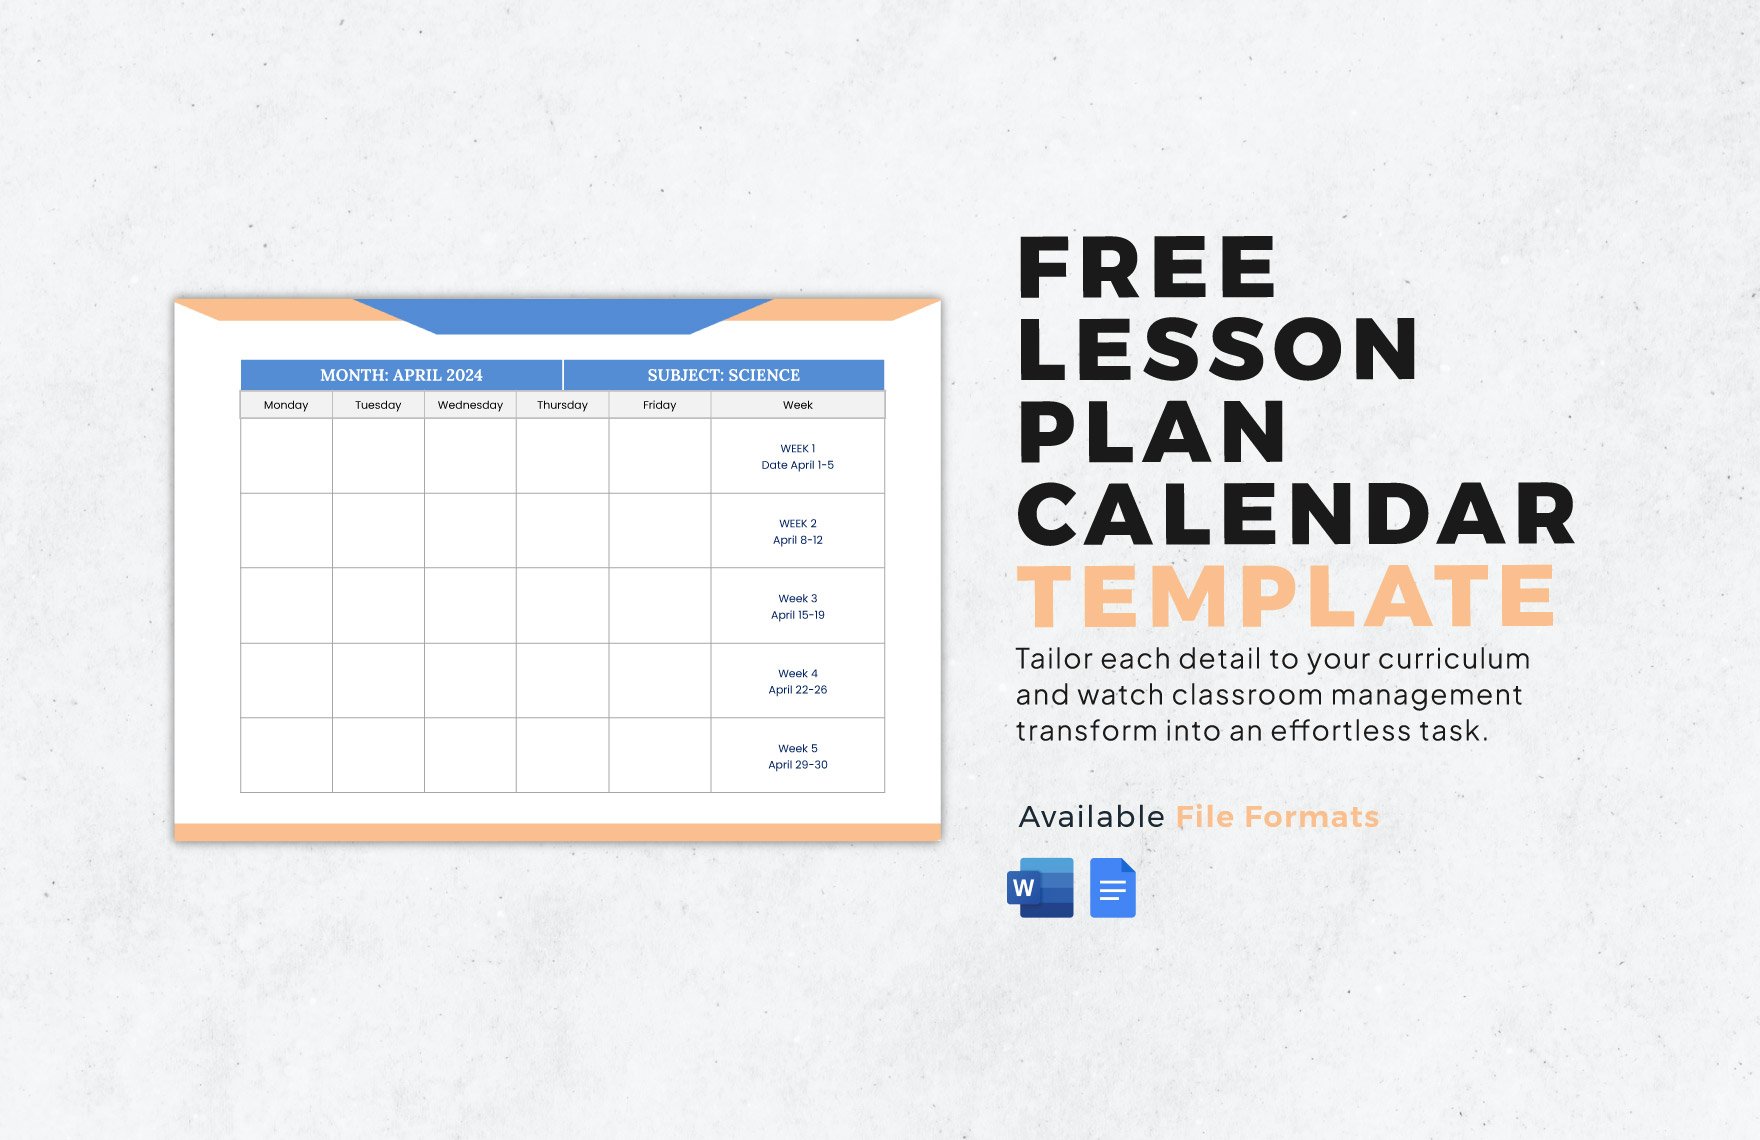 Free Lesson Plan Calendar Template in Word, Google Docs, PDF